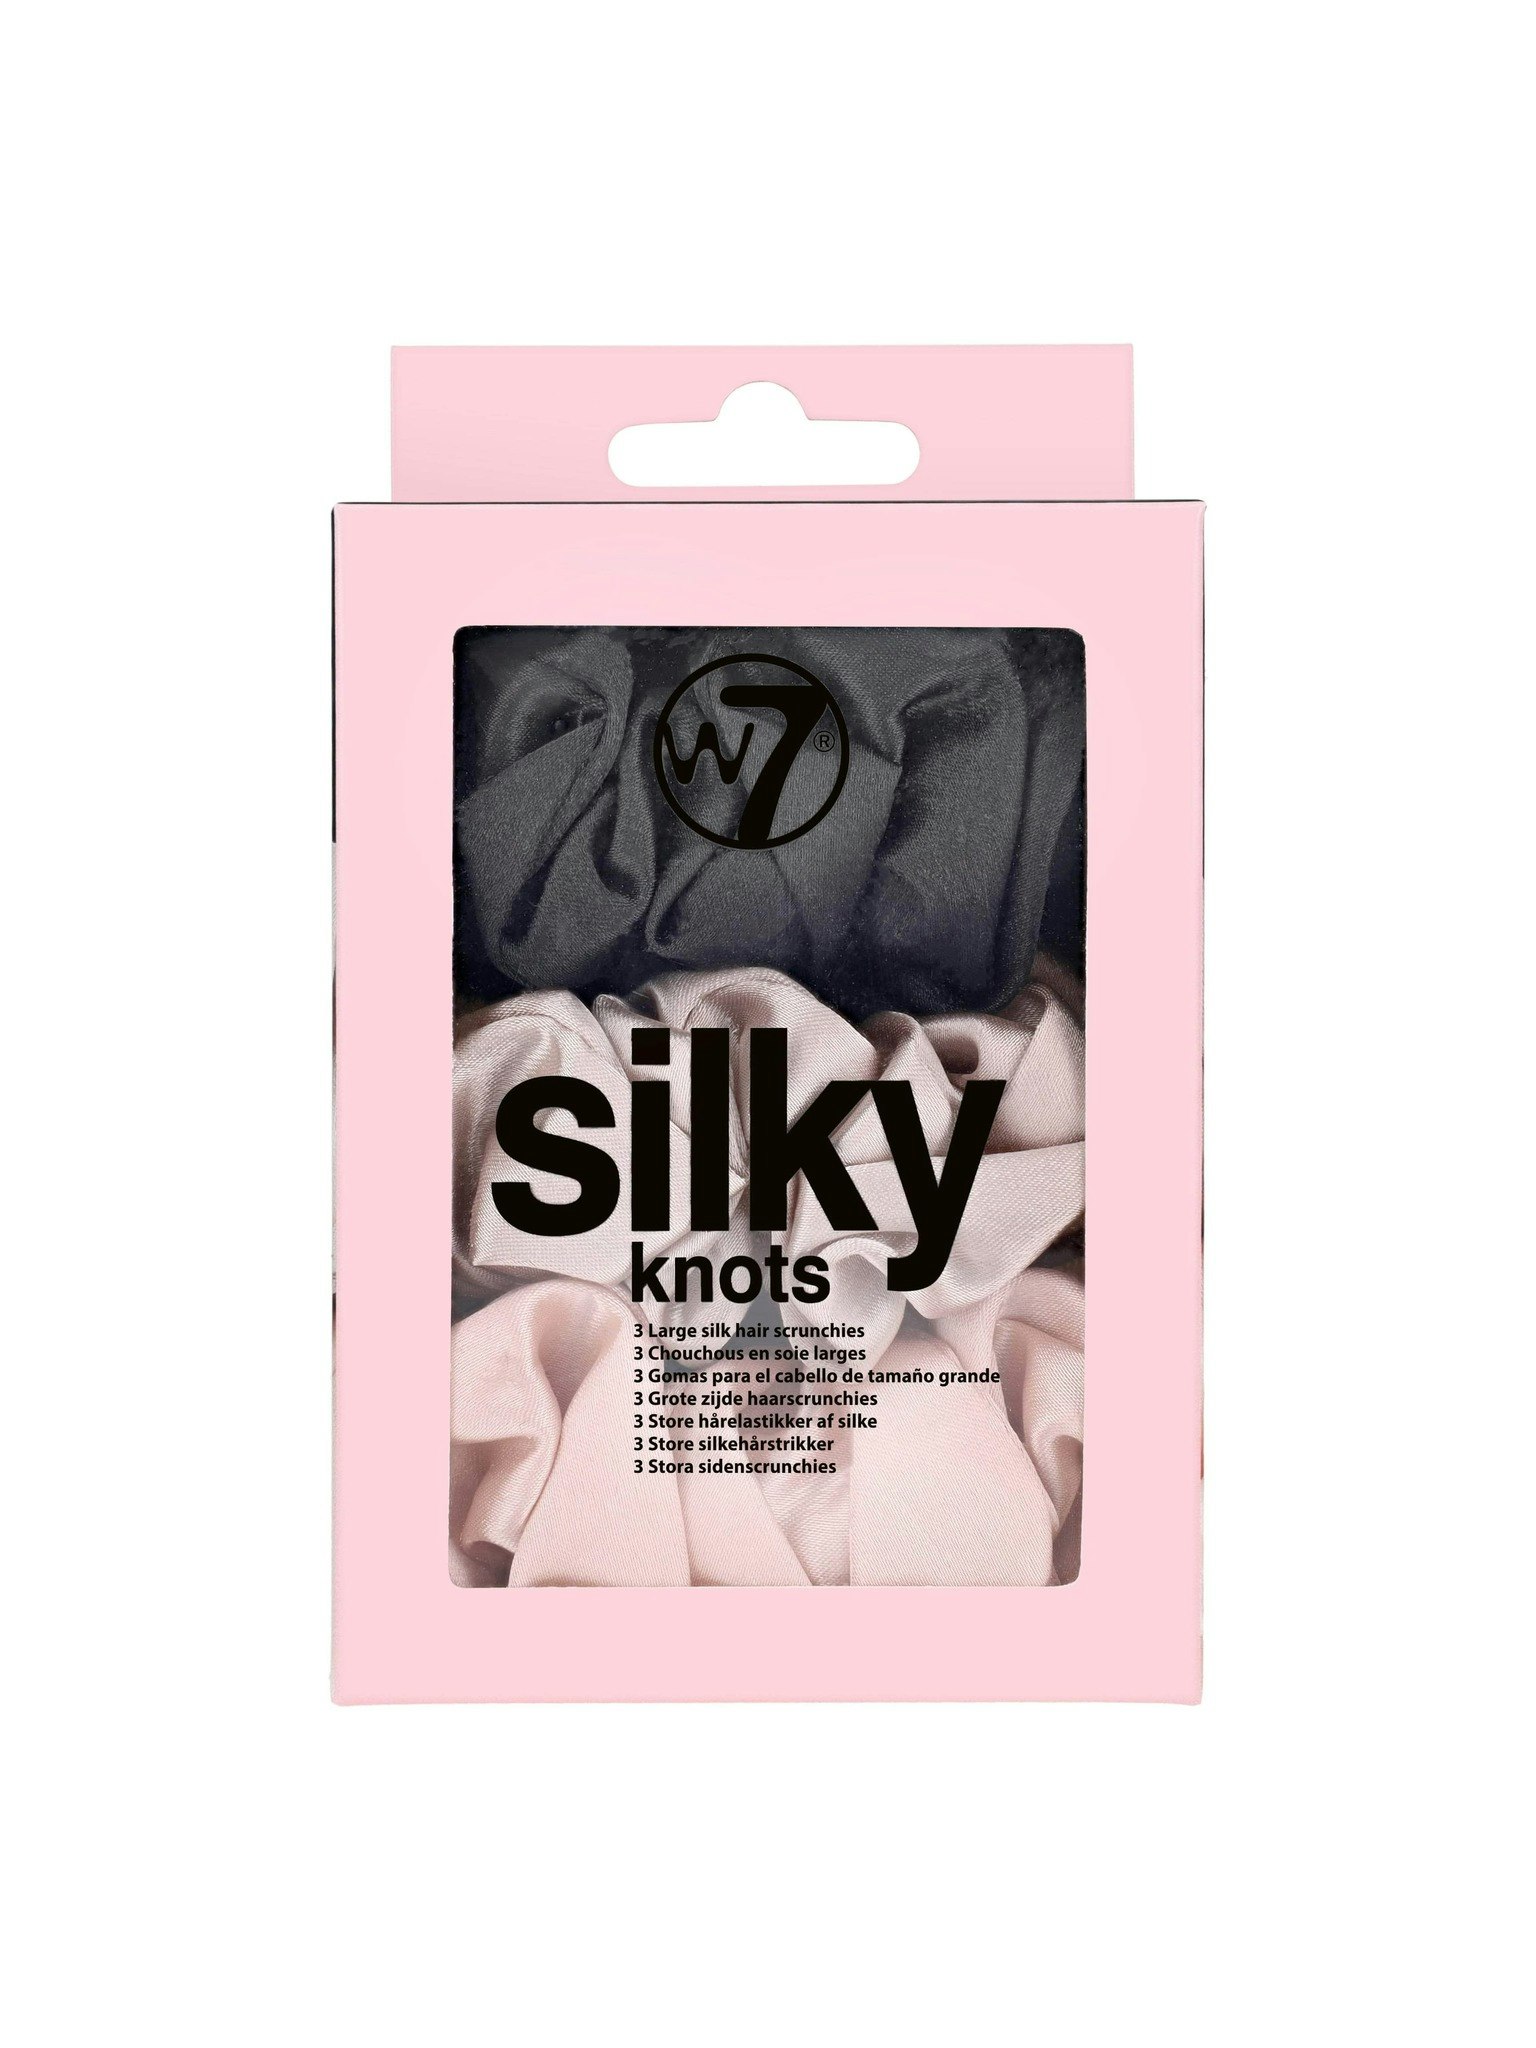 W7 Silky Knots Hair Scrunchies 3 Pack - Original